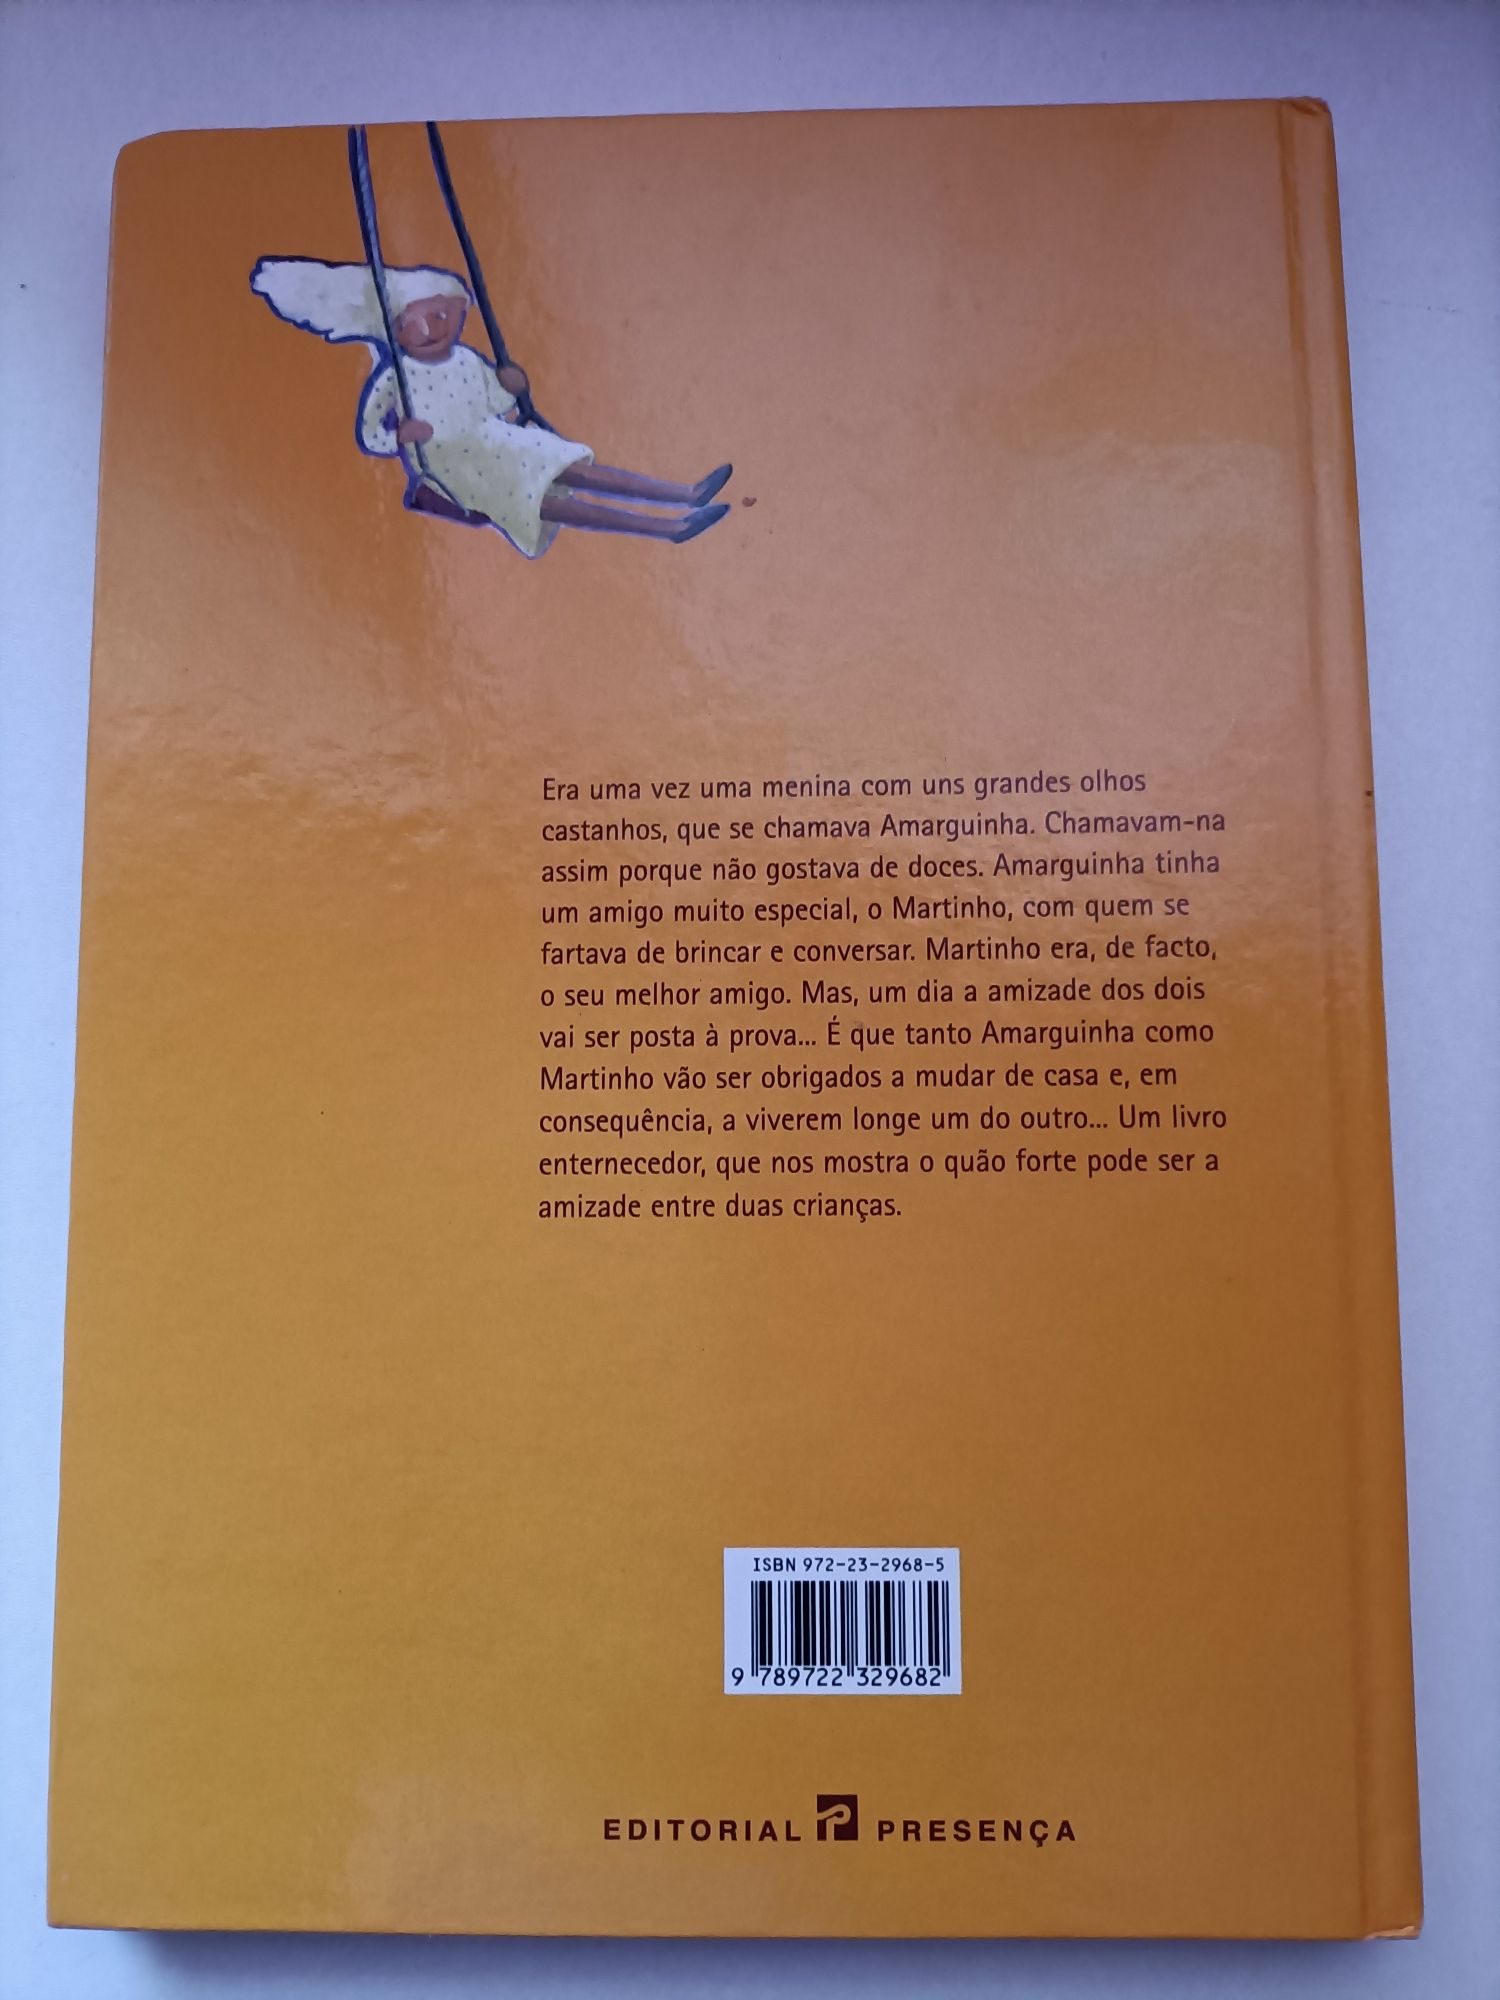 "A amarguinha" livro de Tiago Rebelo.